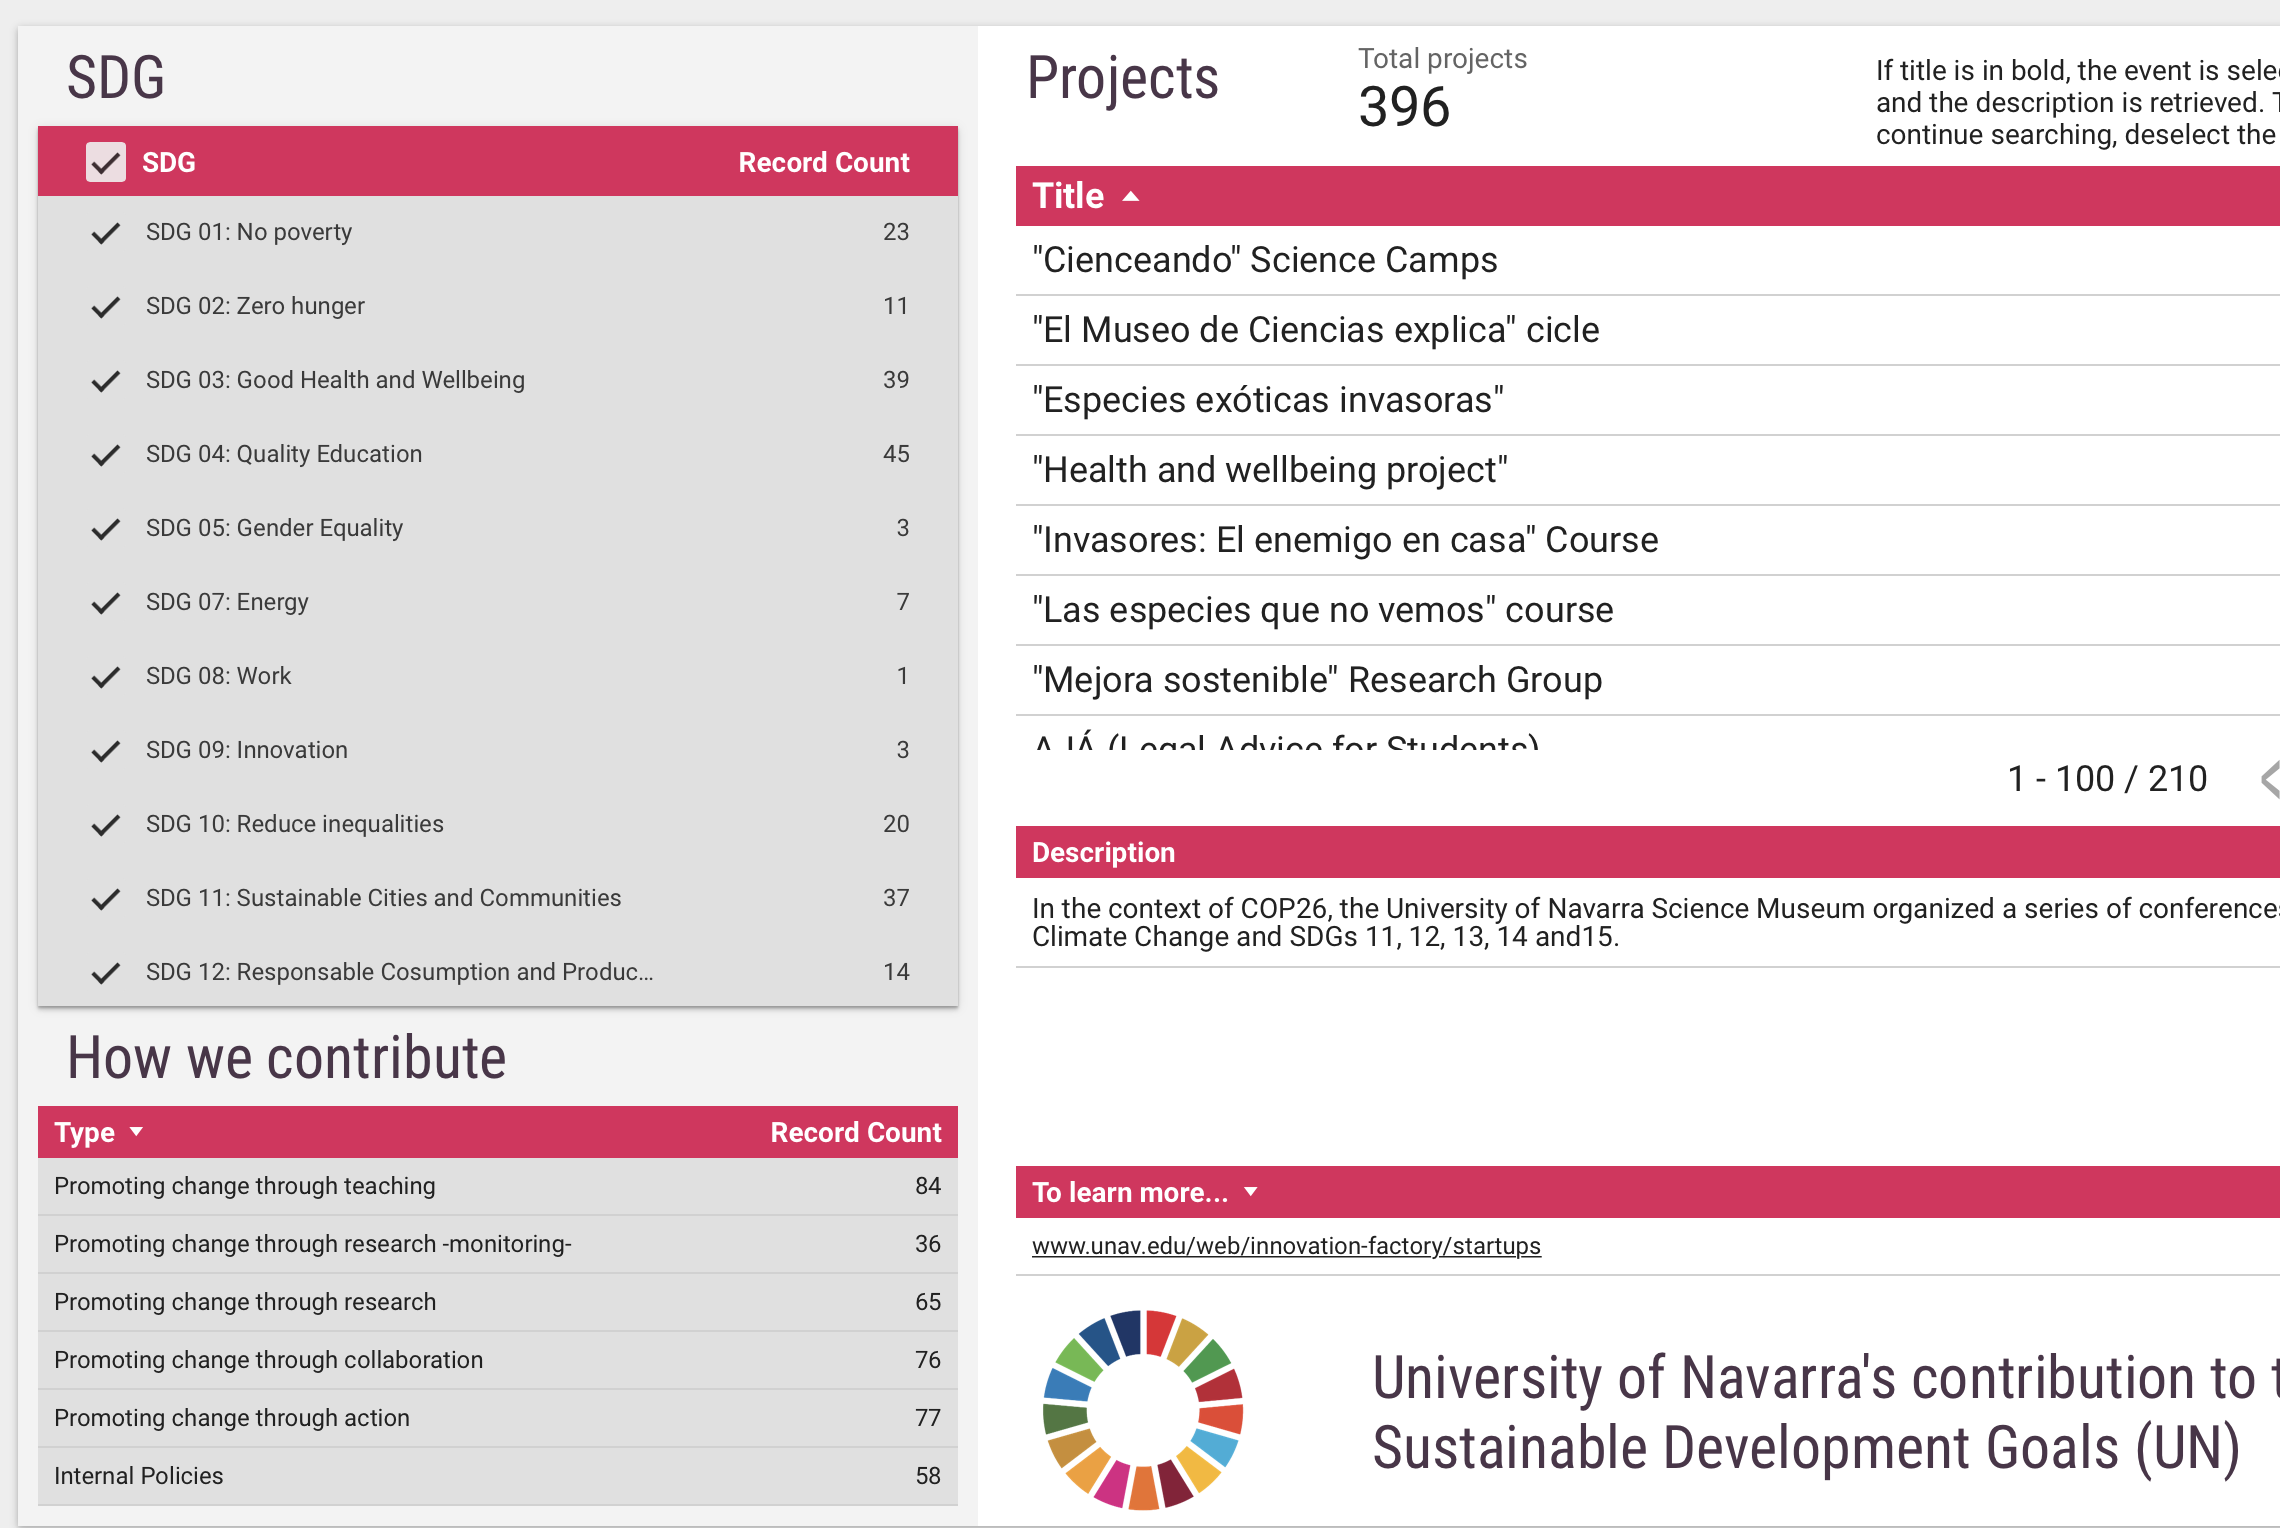 University of Navarra's contributions to the SDGs